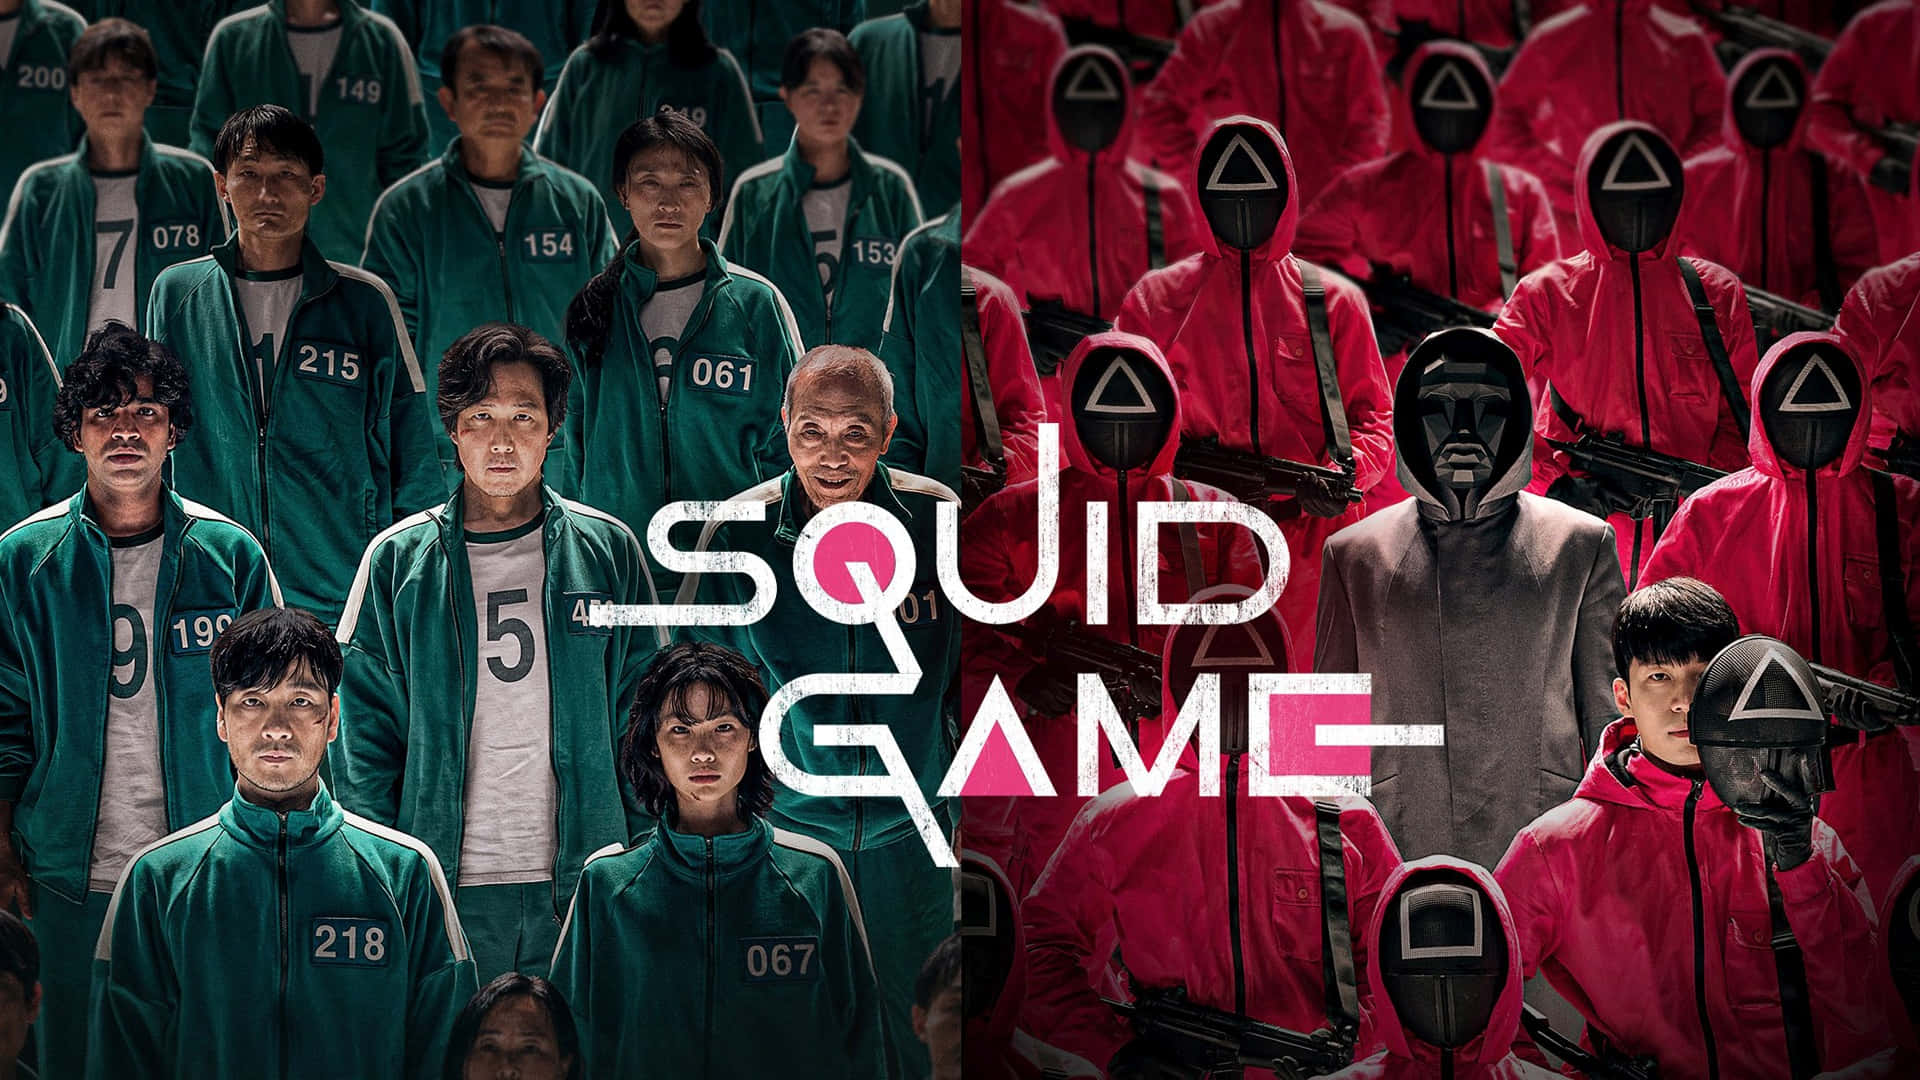 Utmanadig Själv: Spela Squid Game